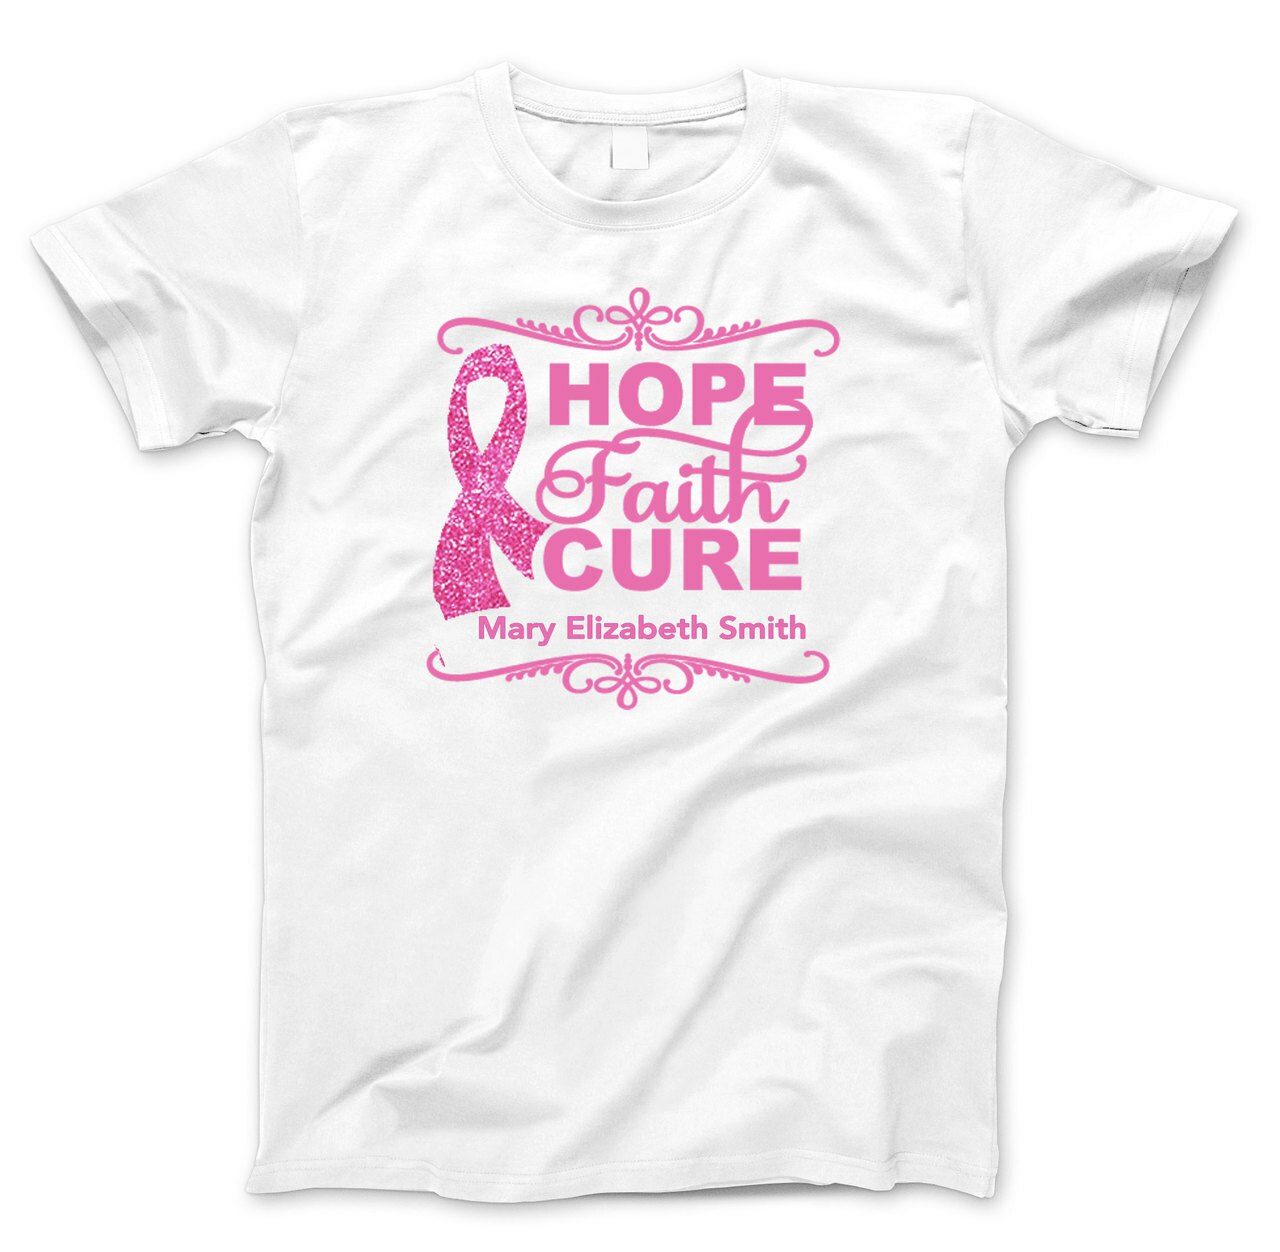 Hope Faith Cure In Loving Memory T-Shirt (Ladies).